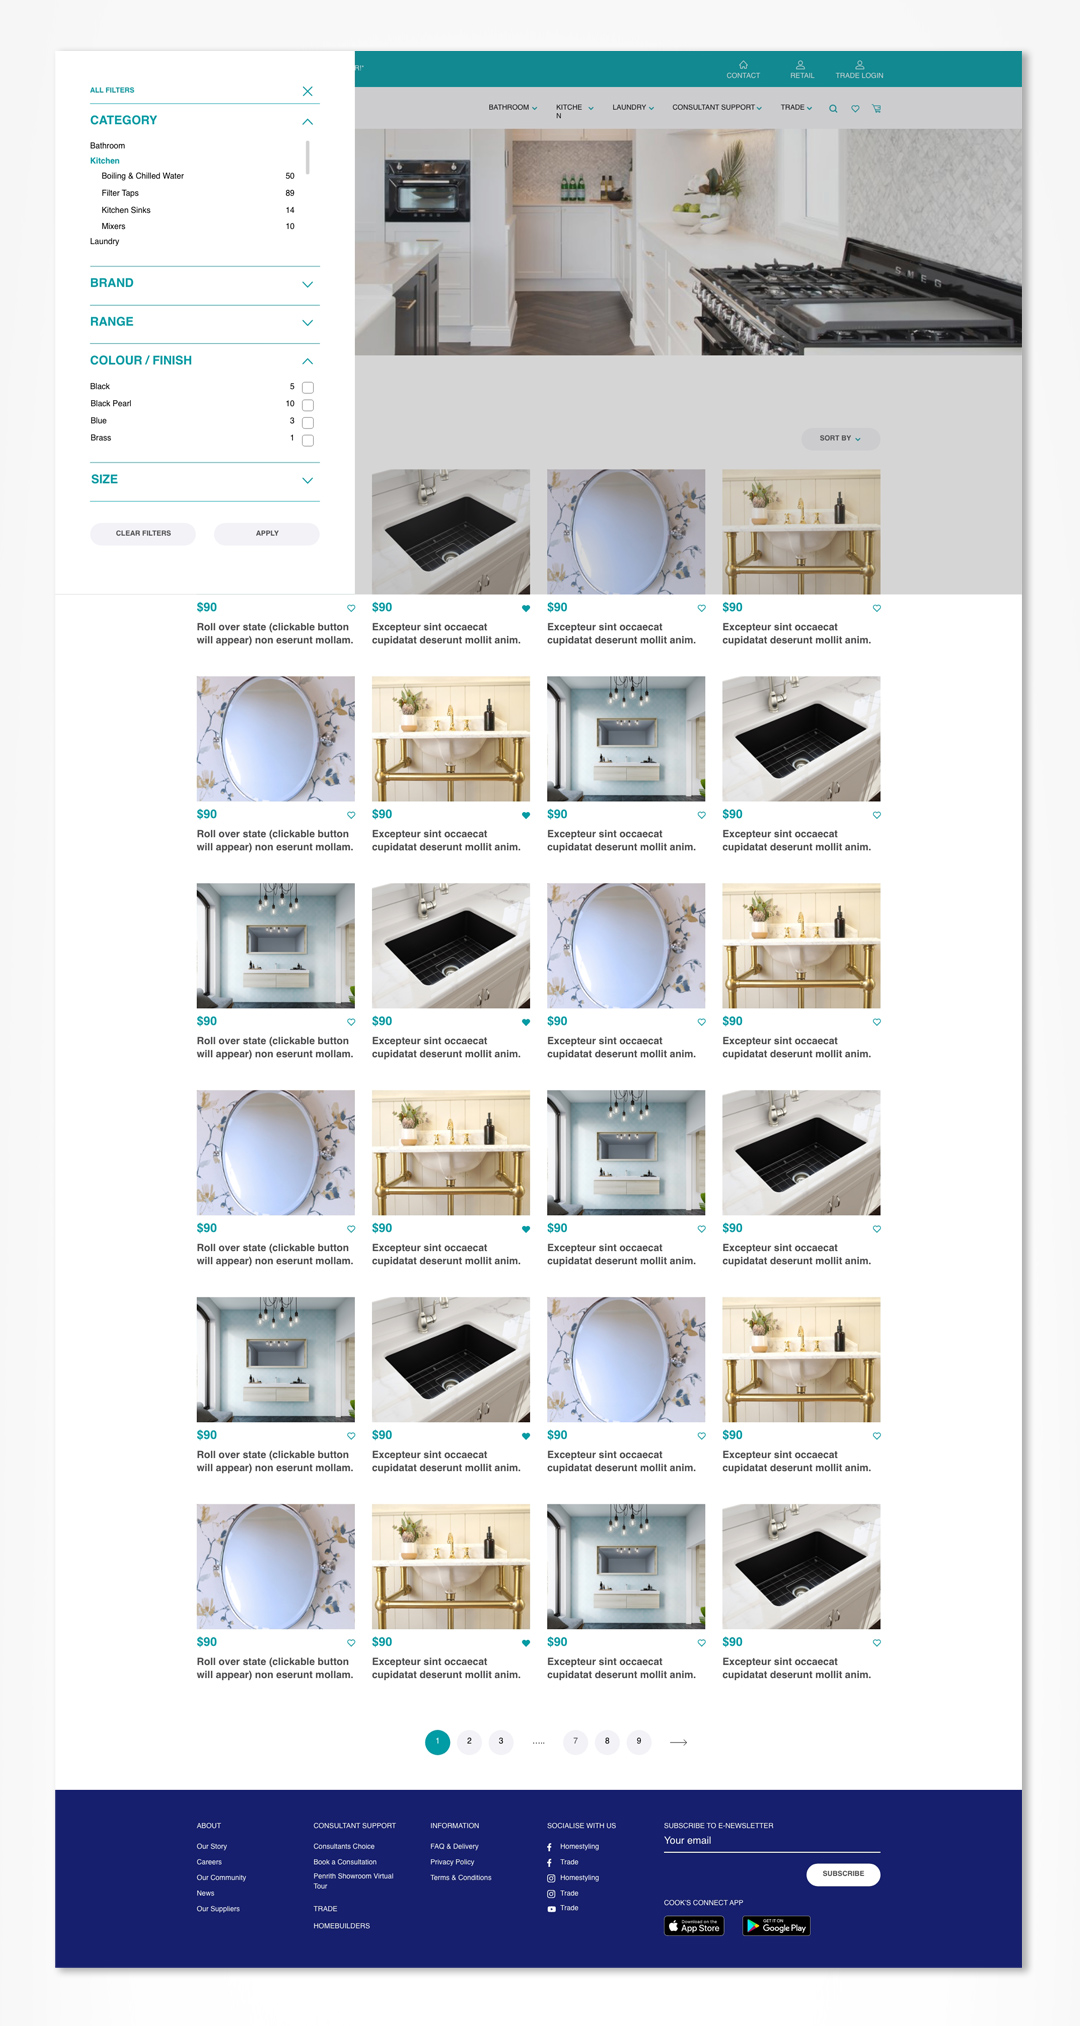 Cook's Plumbing website redesign, website wireframe and high fidelity prototype.